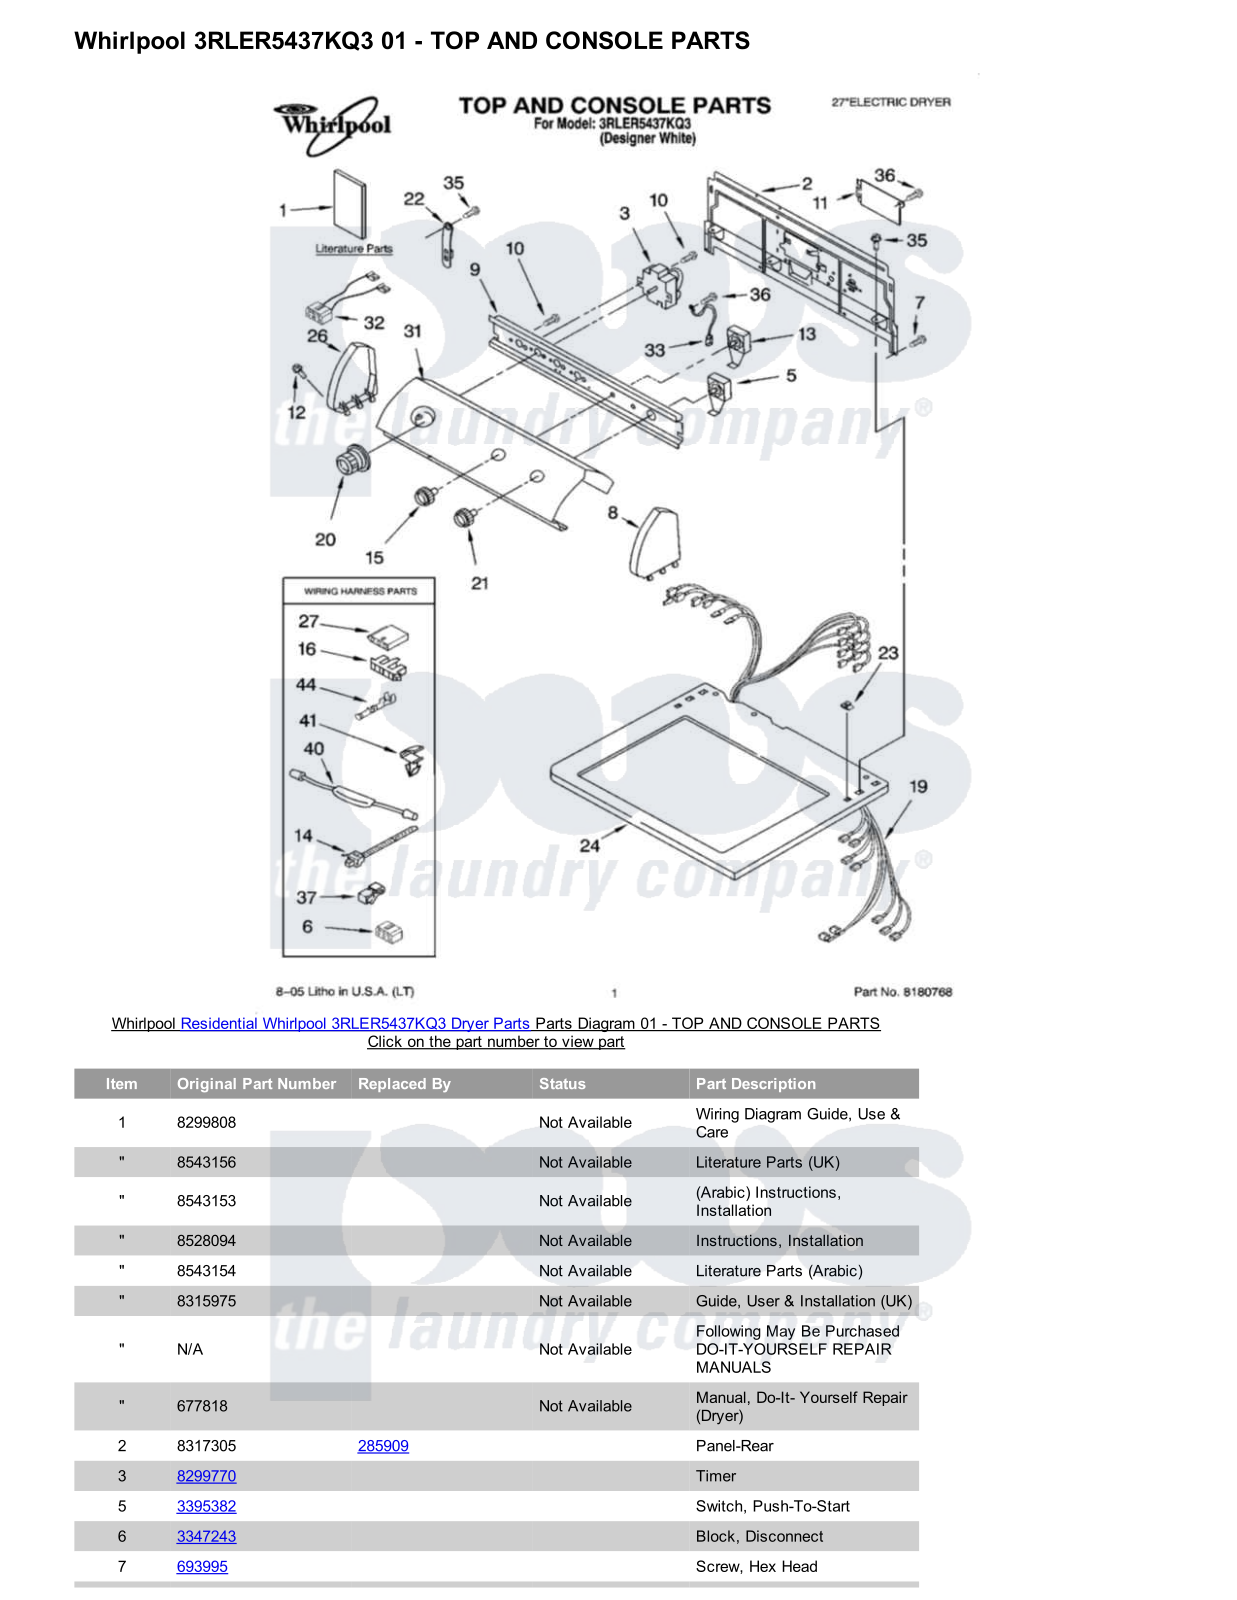 Whirlpool 3RLER5437KQ3 Parts Diagram